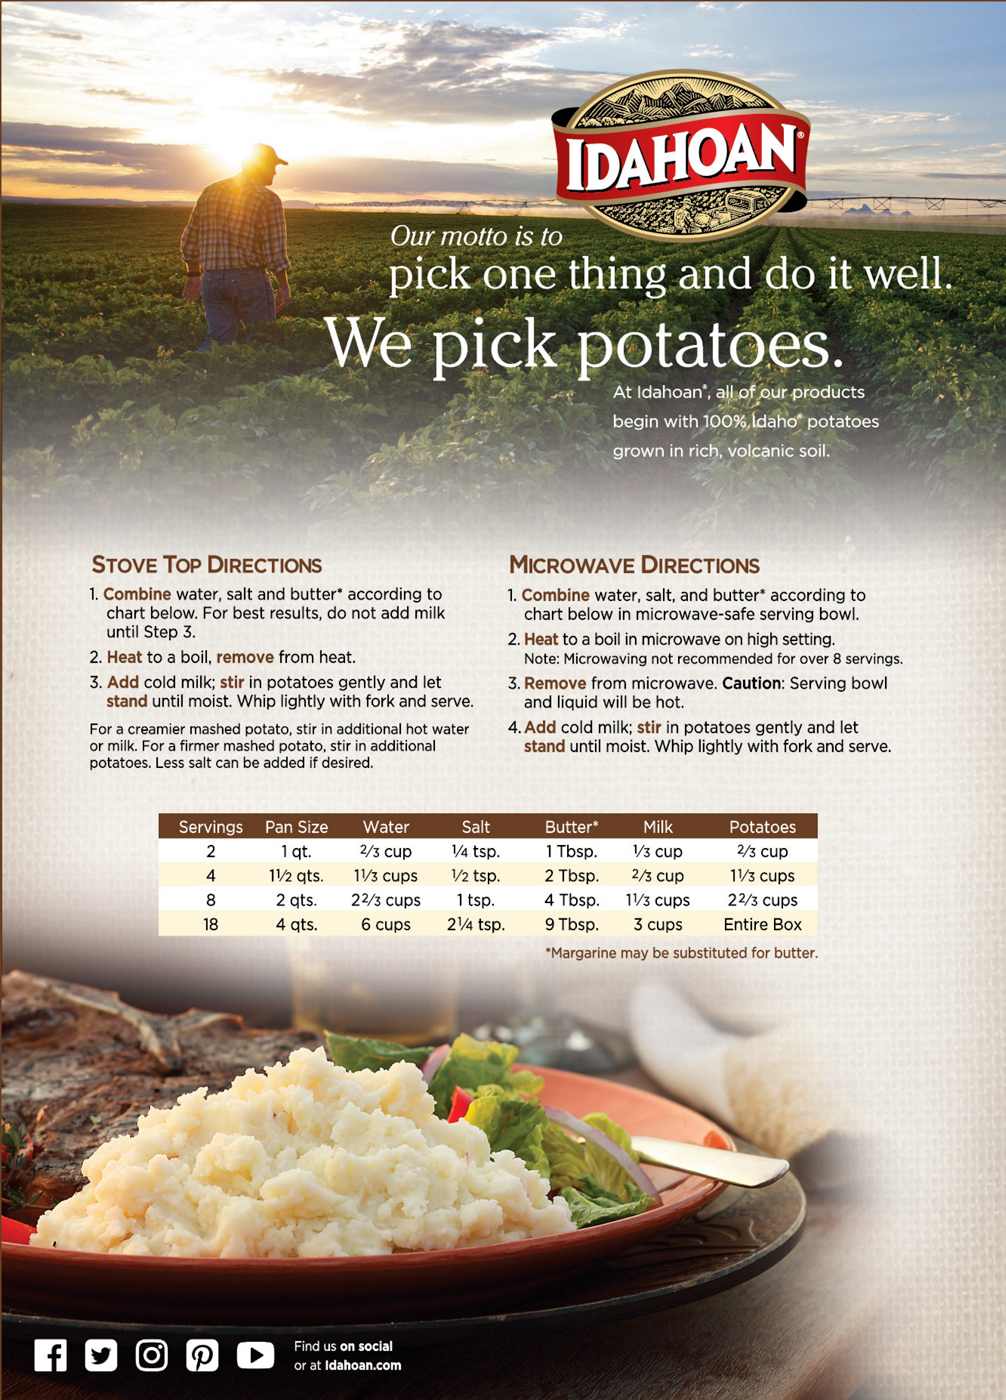 Idahoan Original Mashed Potatoes; image 5 of 7